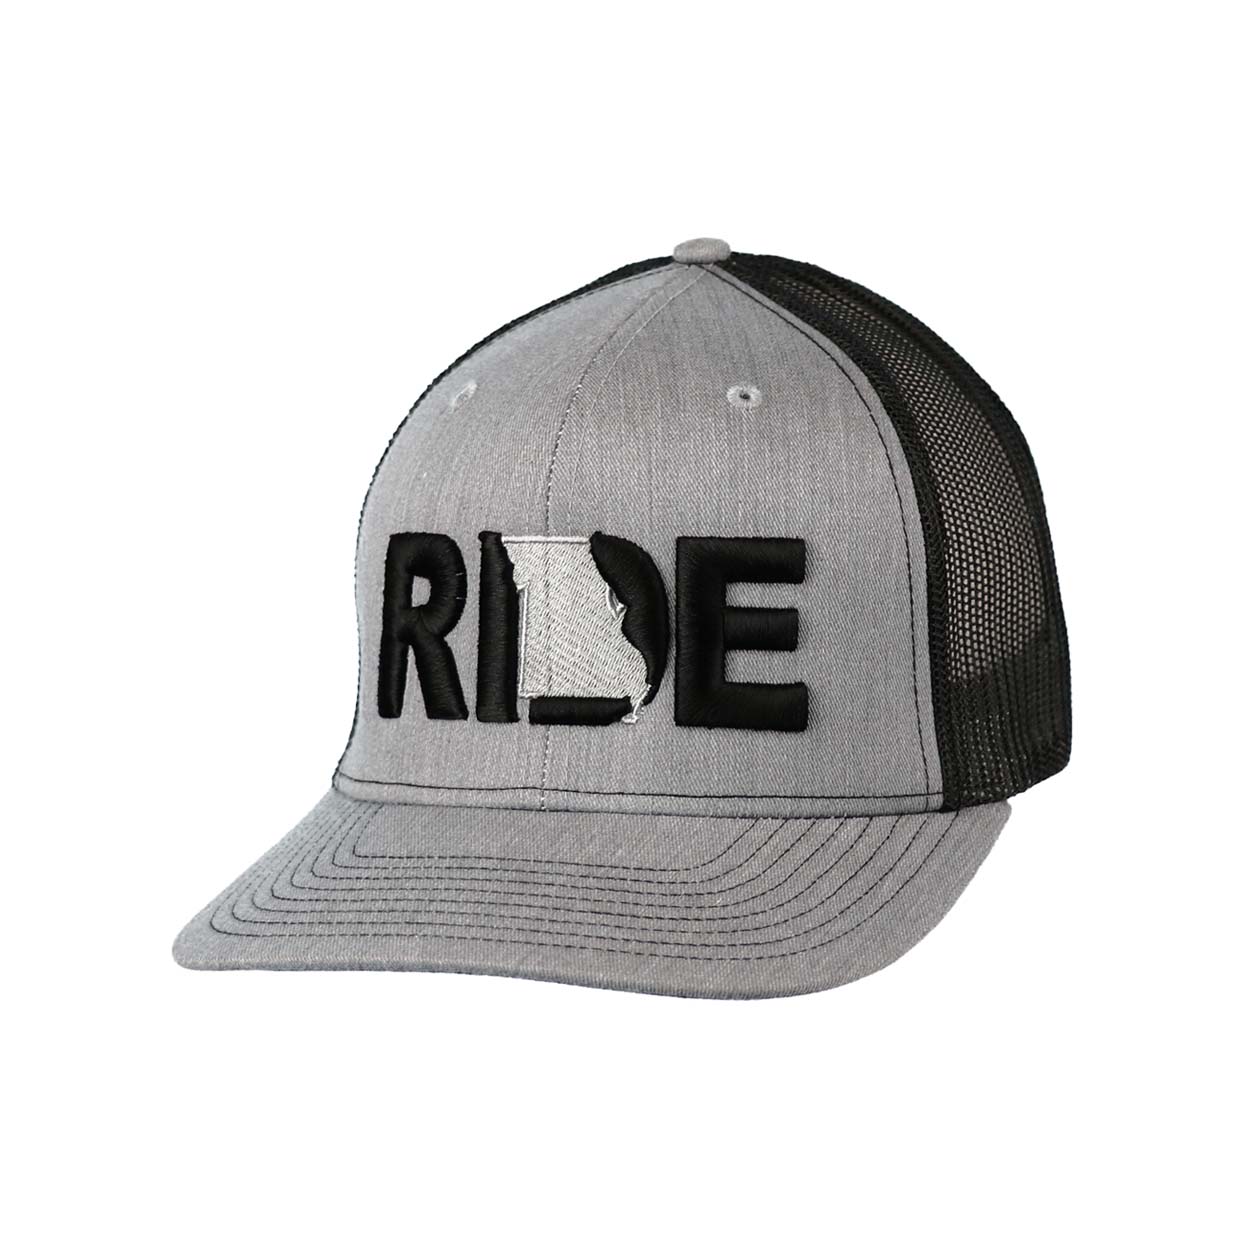 Ride Missouri Classic Embroidered Snapback Trucker Hat Heather Gray/Black